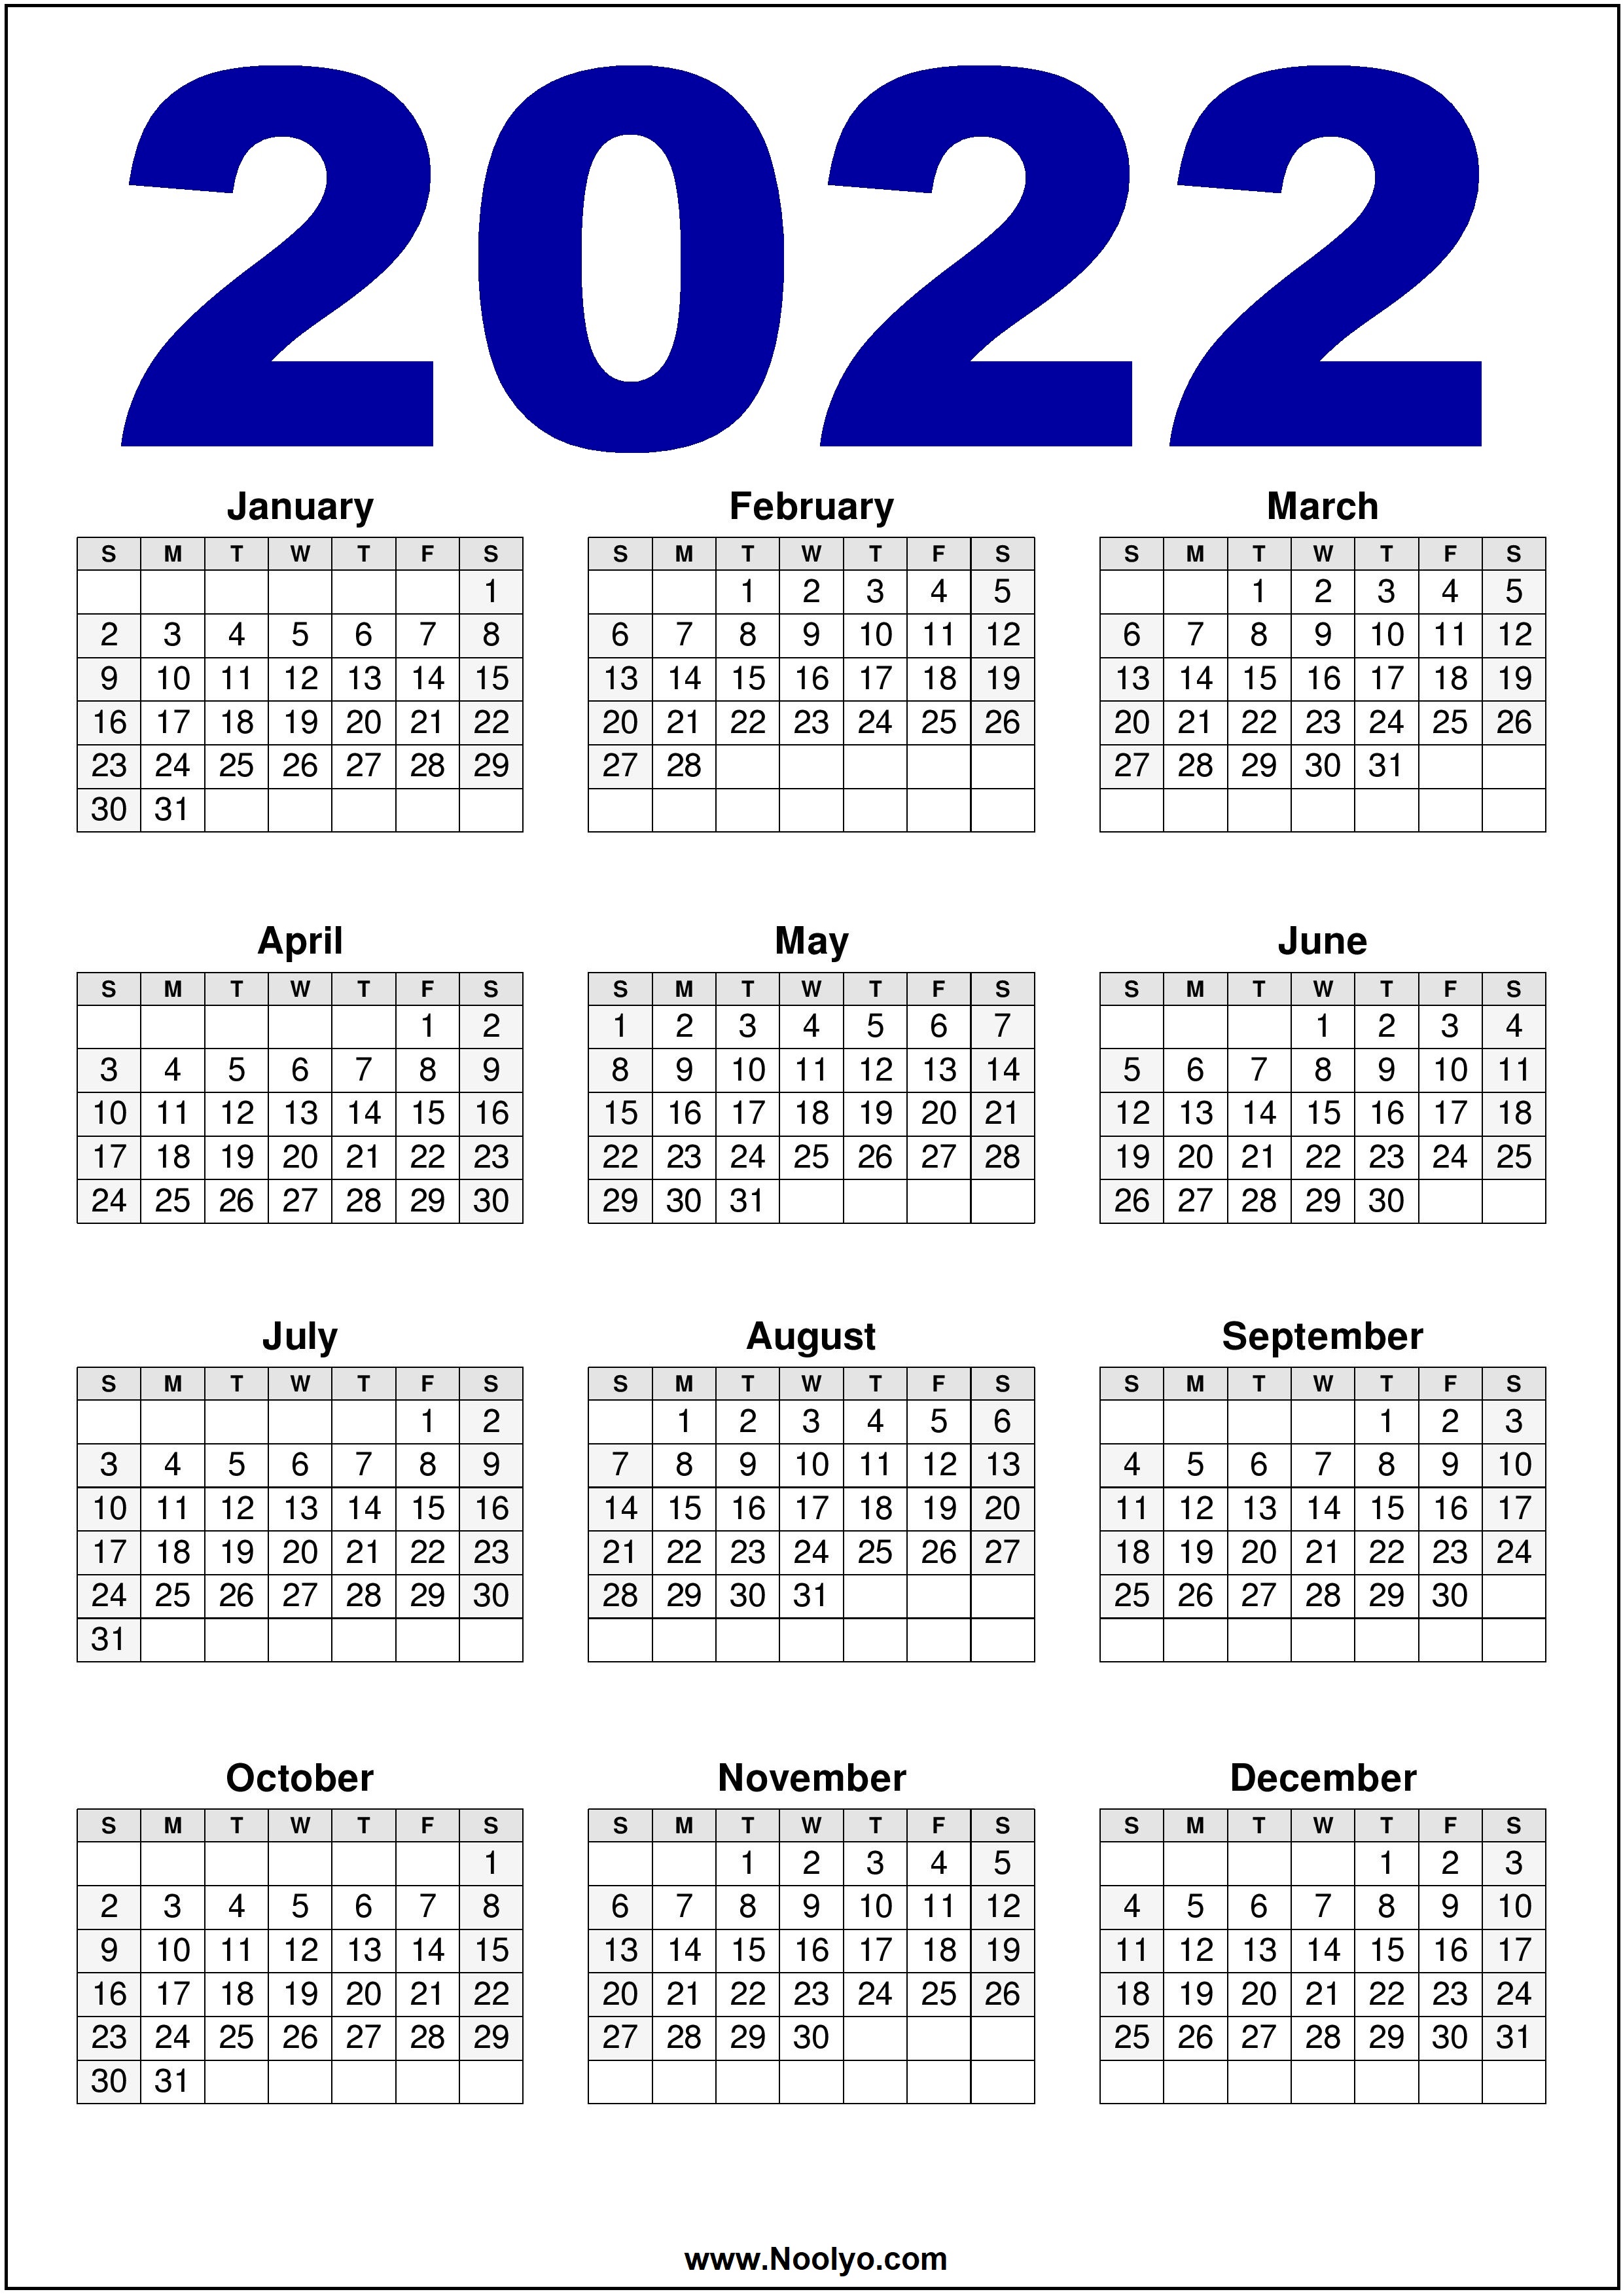 2022 Calendar US Printable - Download Free - Noolyo.com